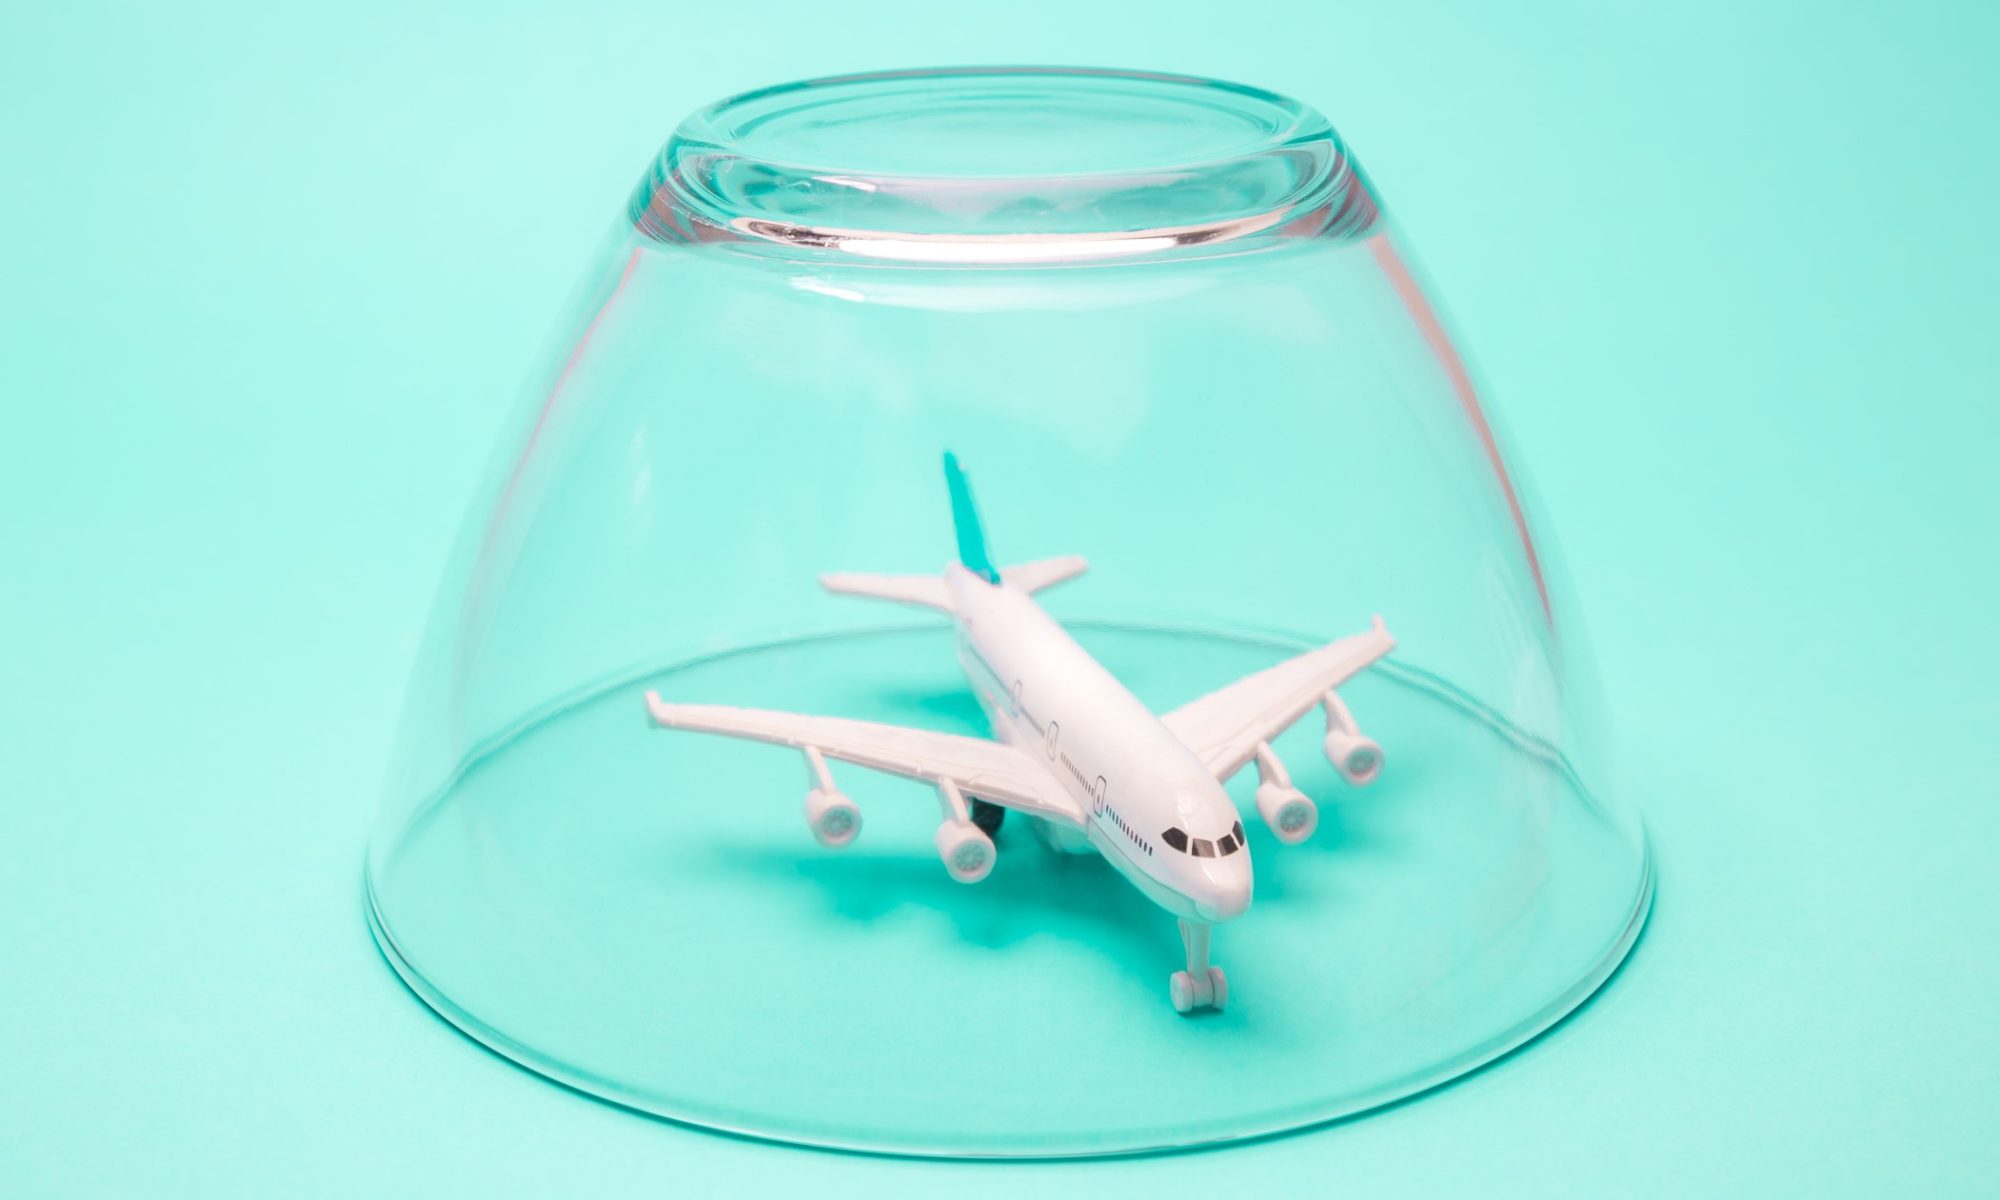 Airplane in isolation quarantine under glass bowl, minimal creative global travel problems during corona virus pandemic.